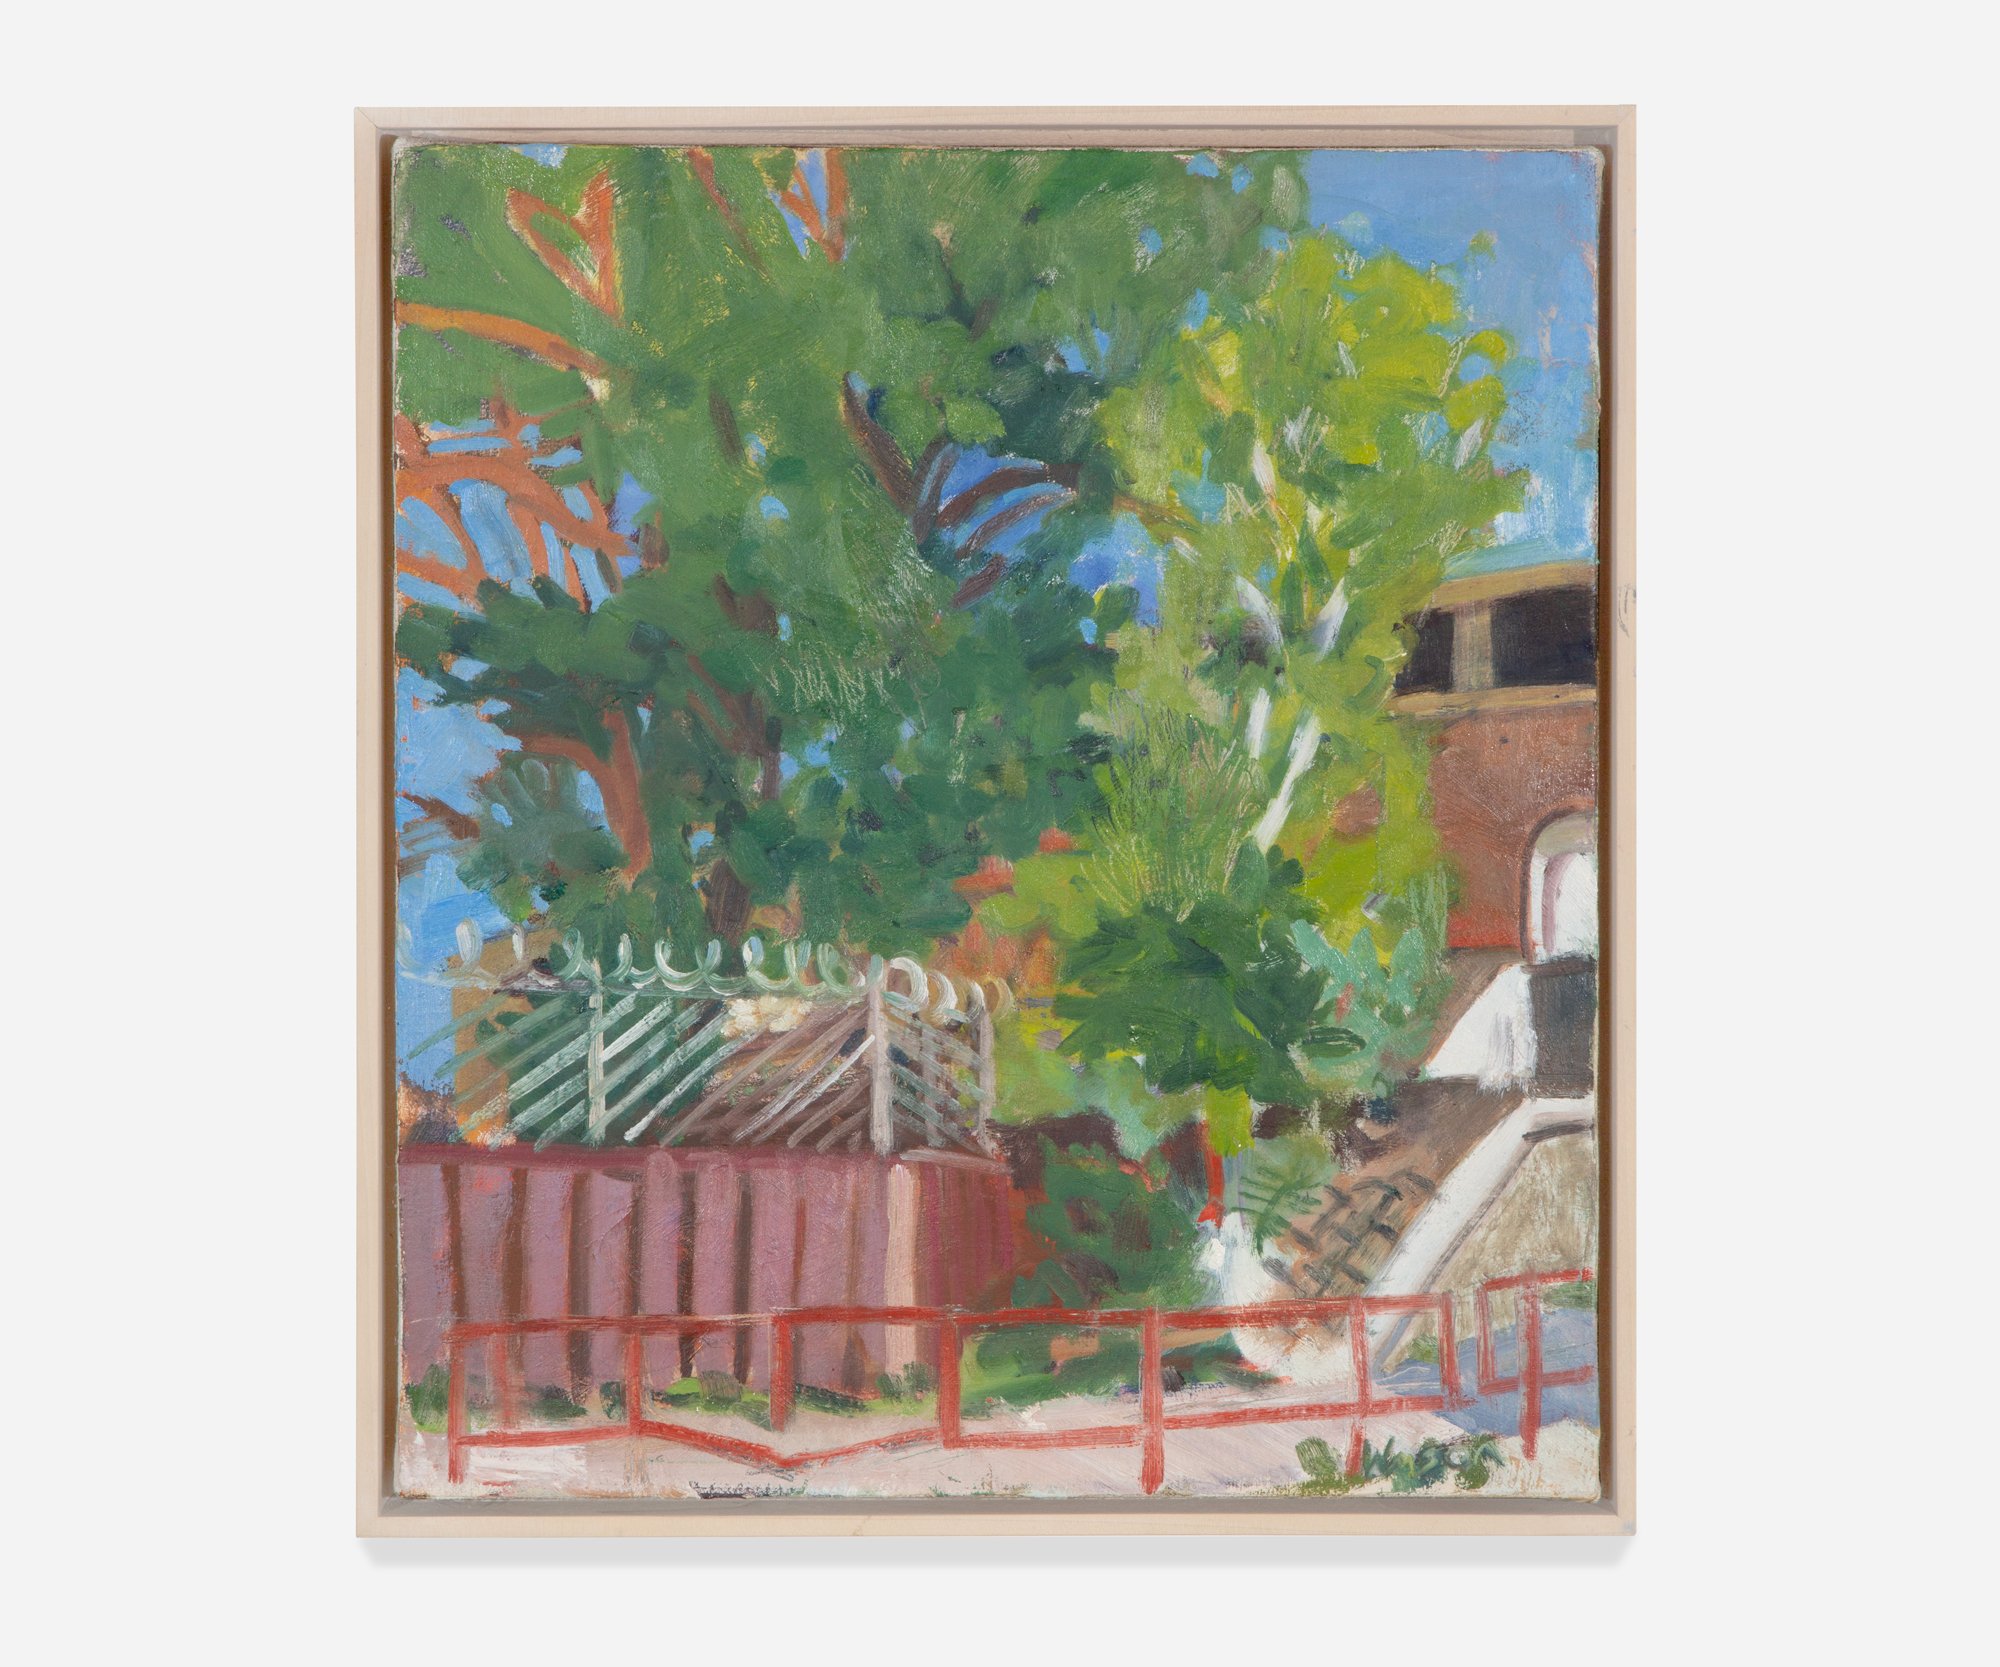   Three Fences , 2012, Oil on canvas, 15 x 17”        